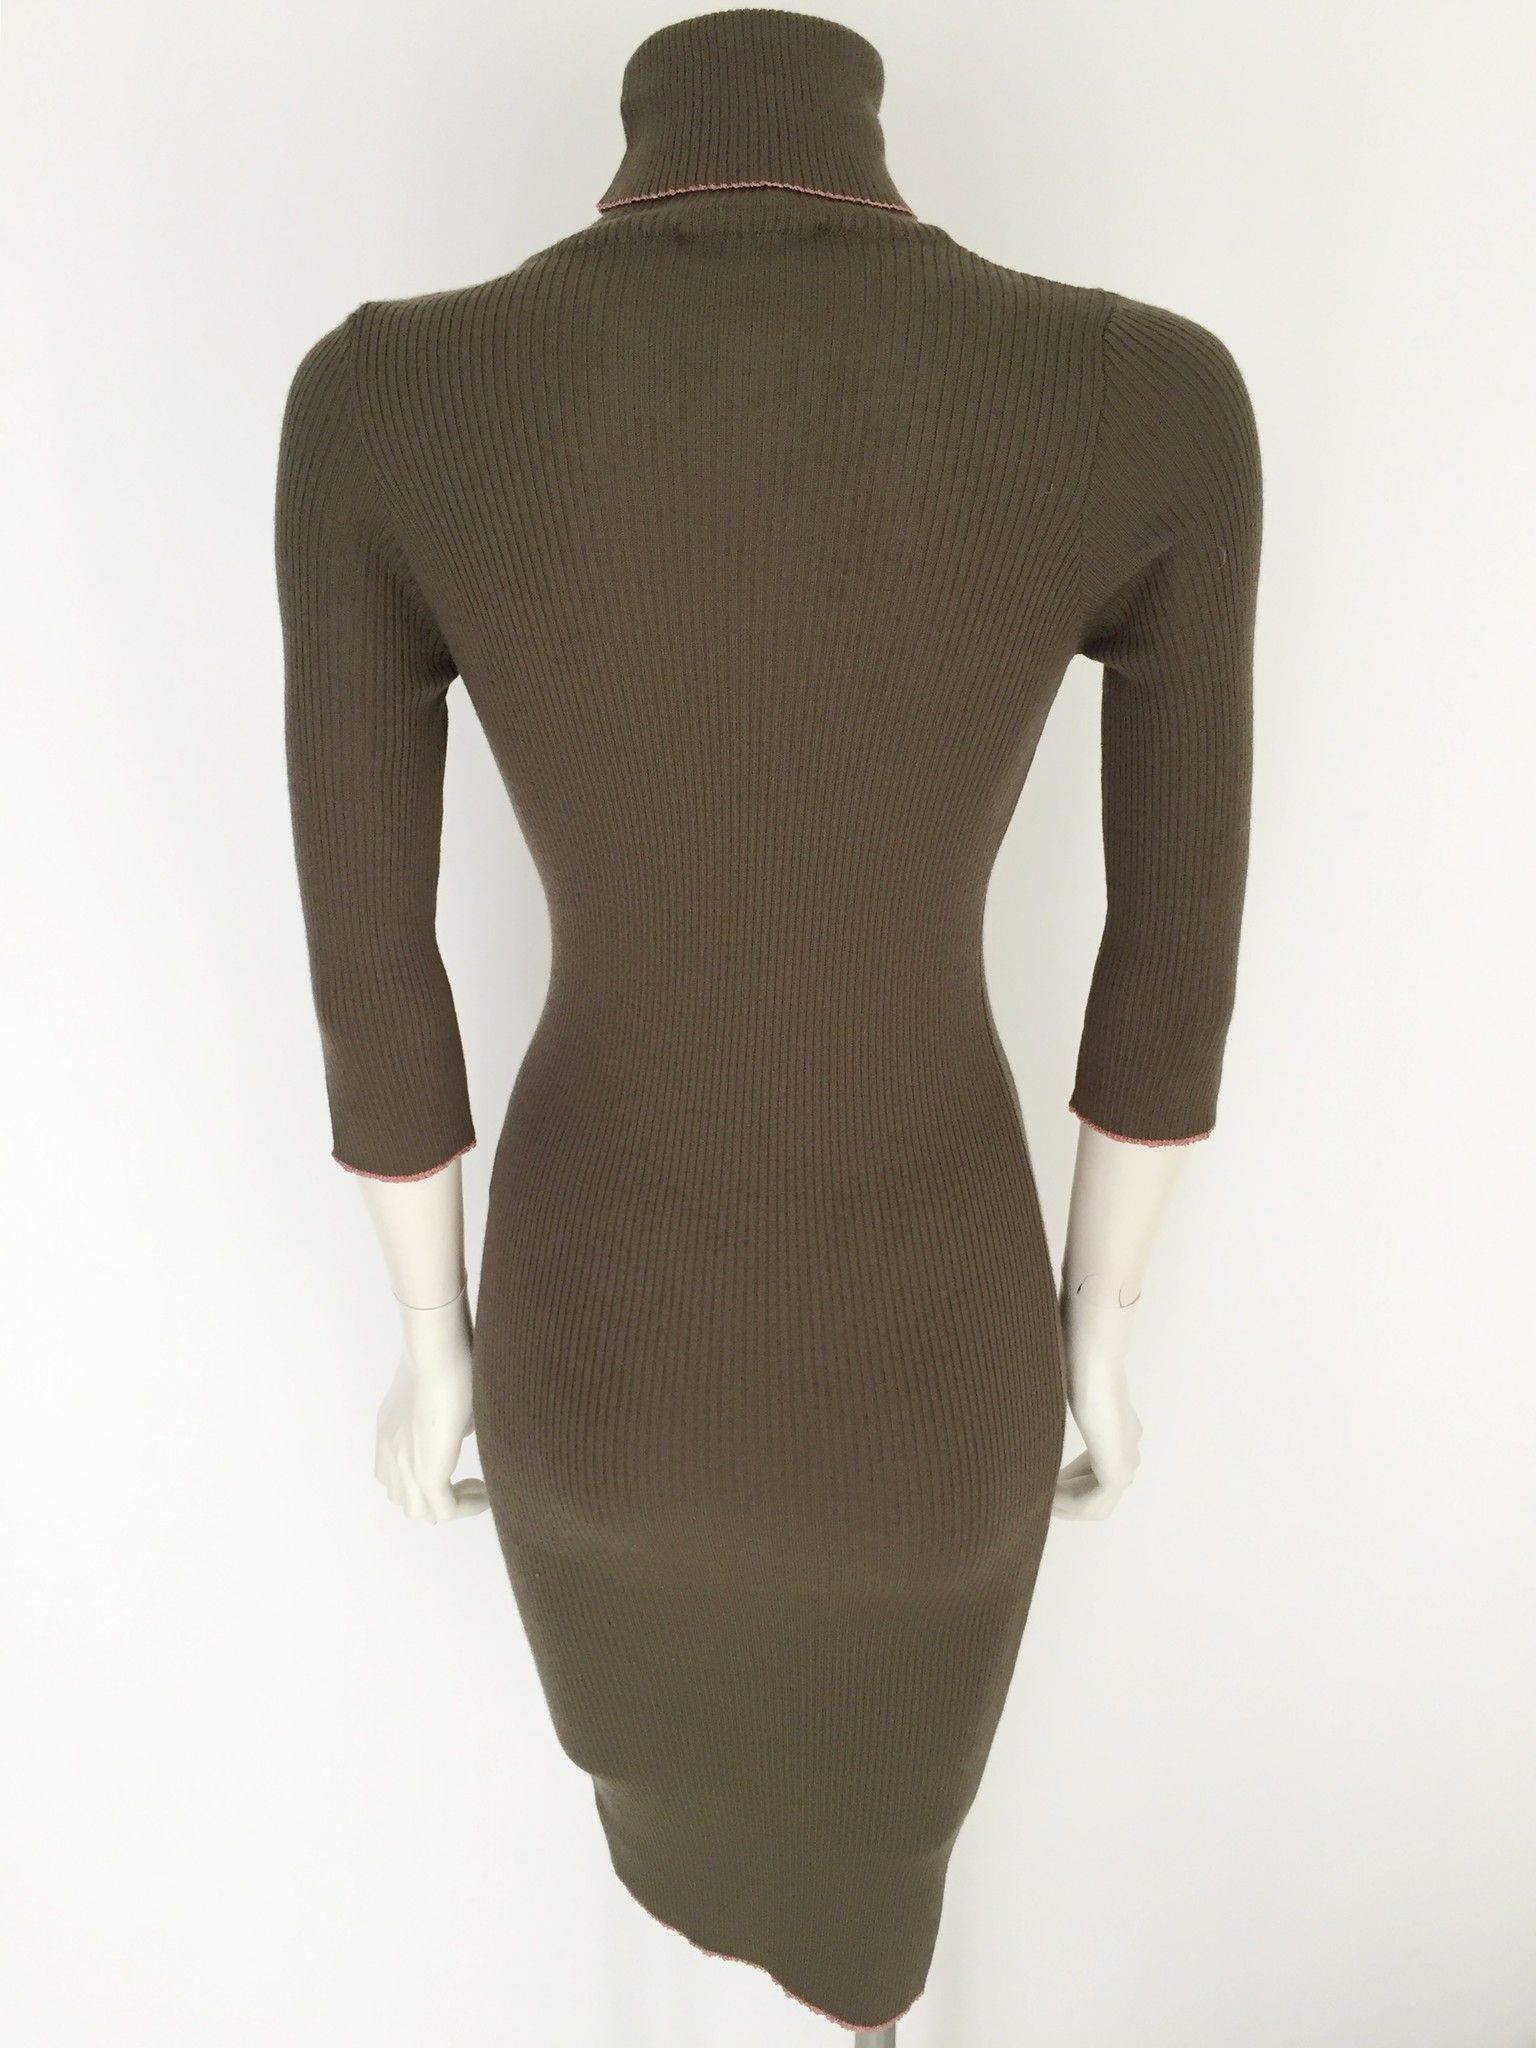 Adele Fado Turtleneck Dress Cod.C905